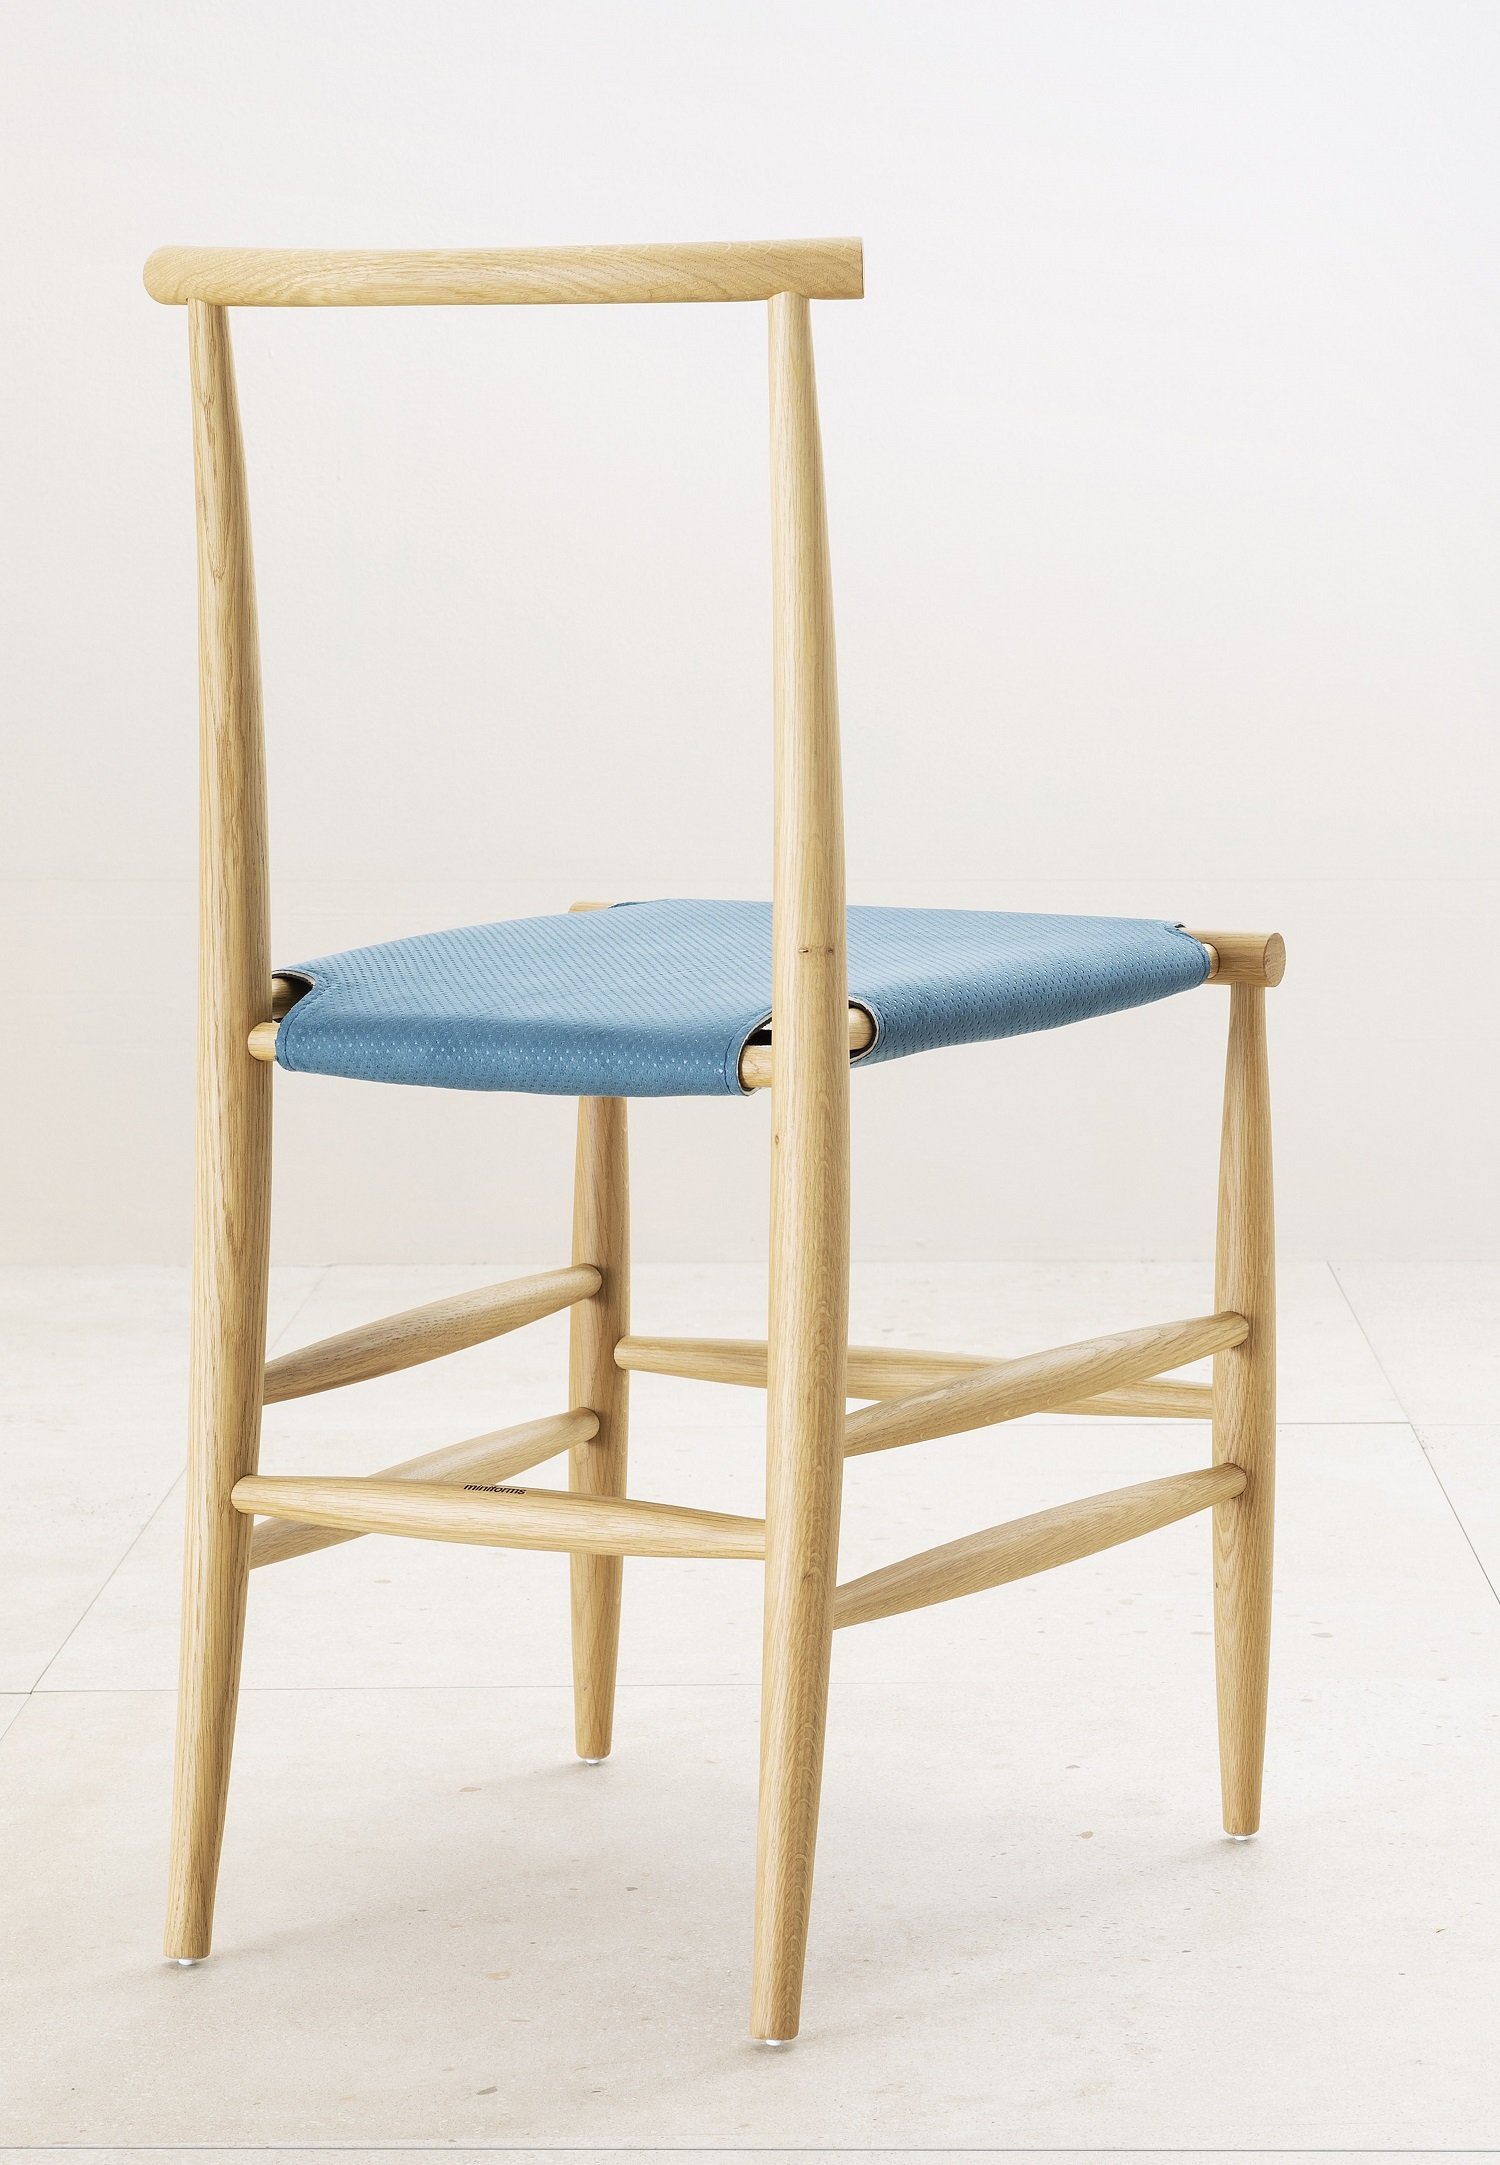 Pelleossa Chair from Miniforms, designed by Francesco Faccin